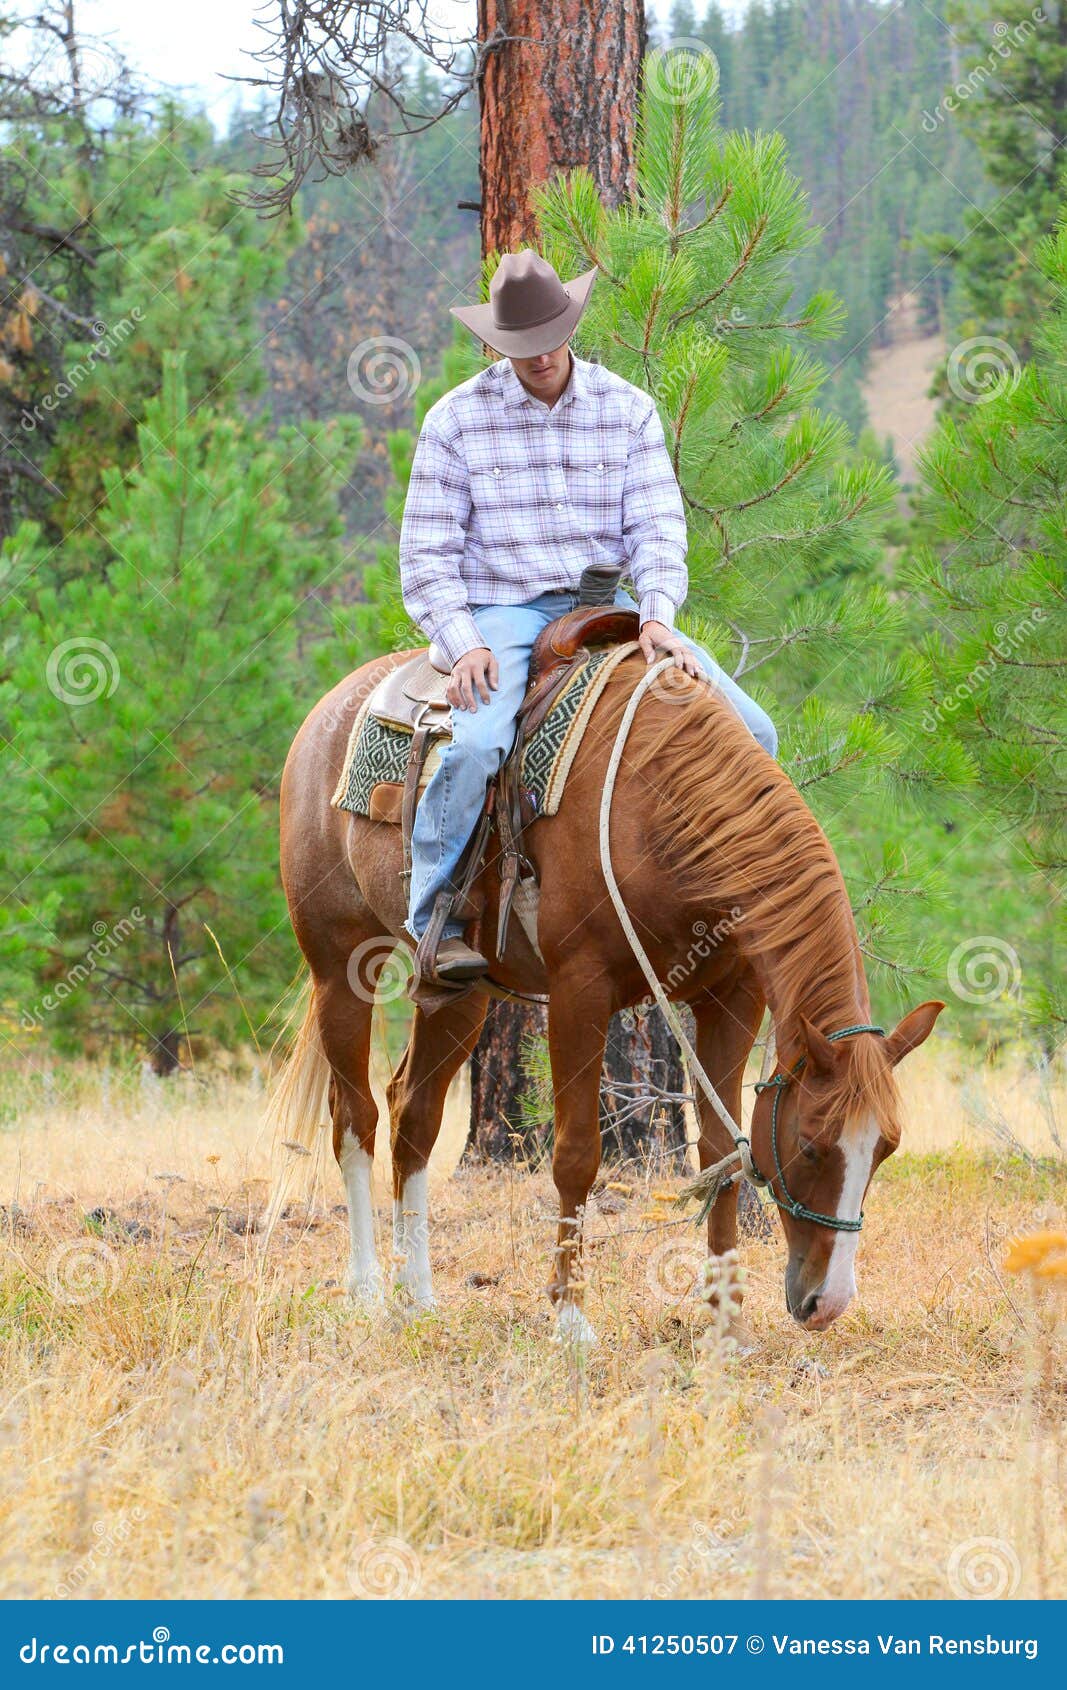 Young cowboy stock image. Image of bush, denim, plants - 41250507